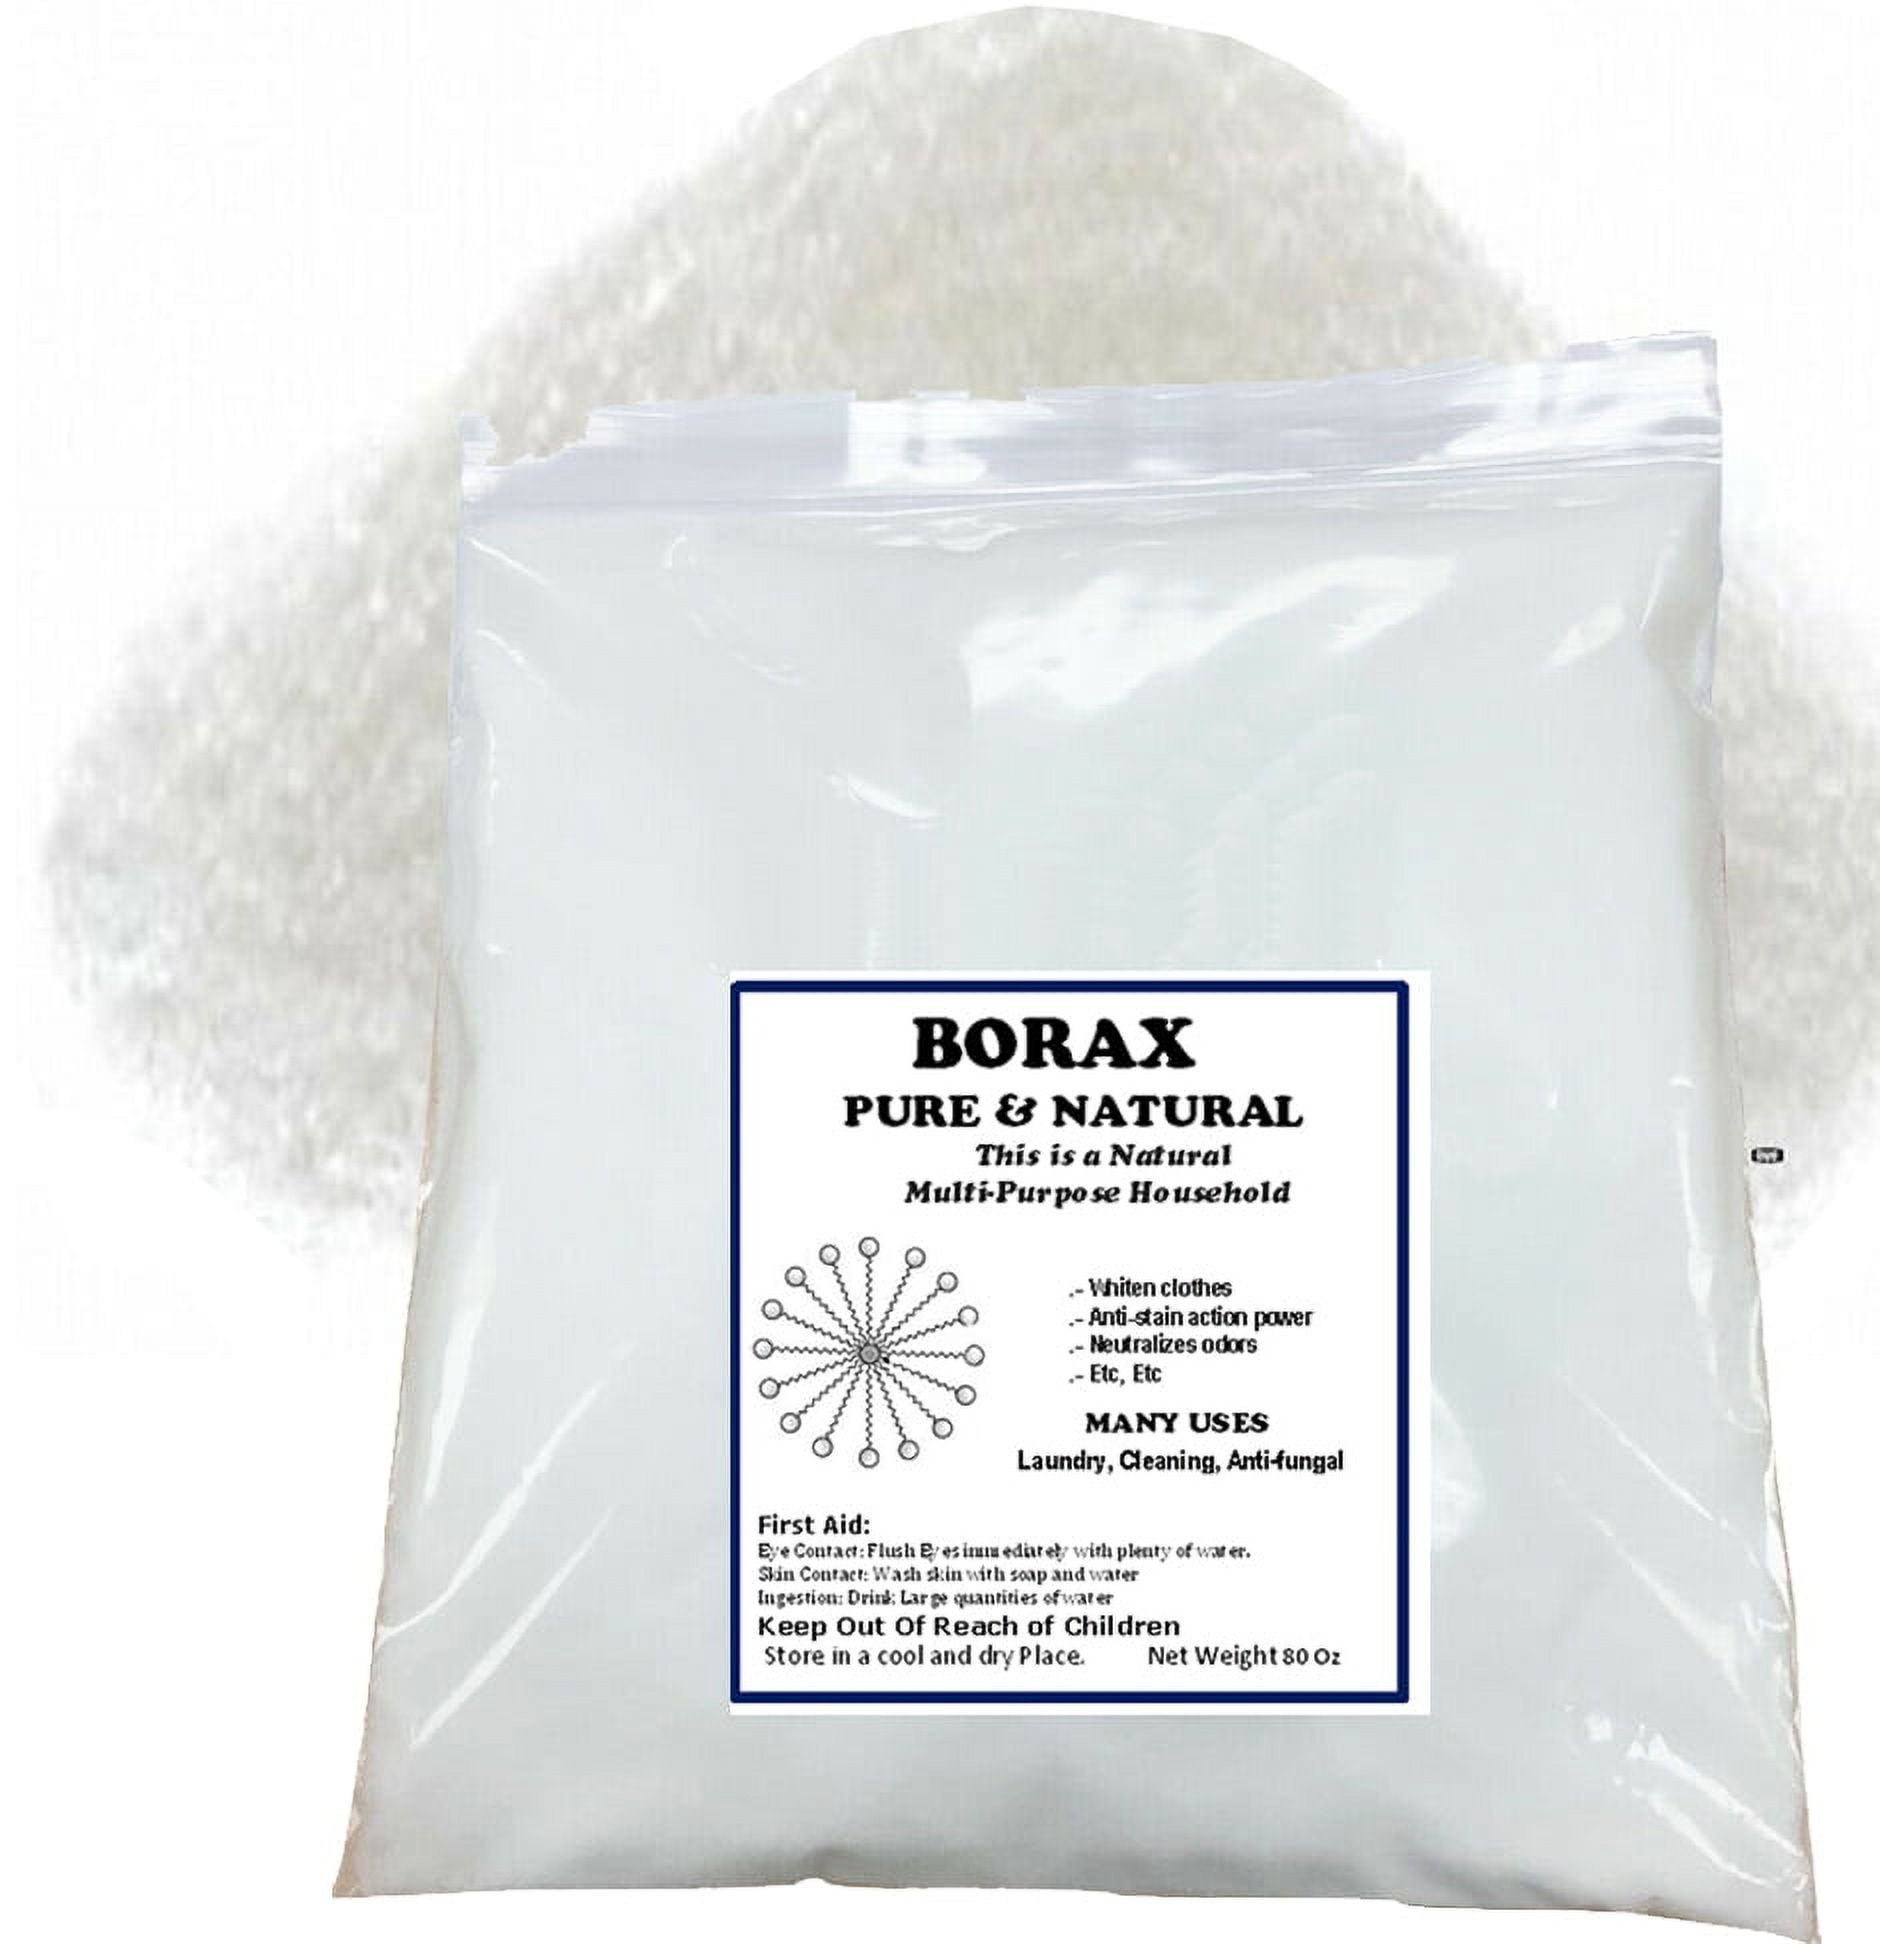 Milliard Borax Laundry Booster, Pure Multi Purpose Cleaner - Detergent  Powder (5 lb)